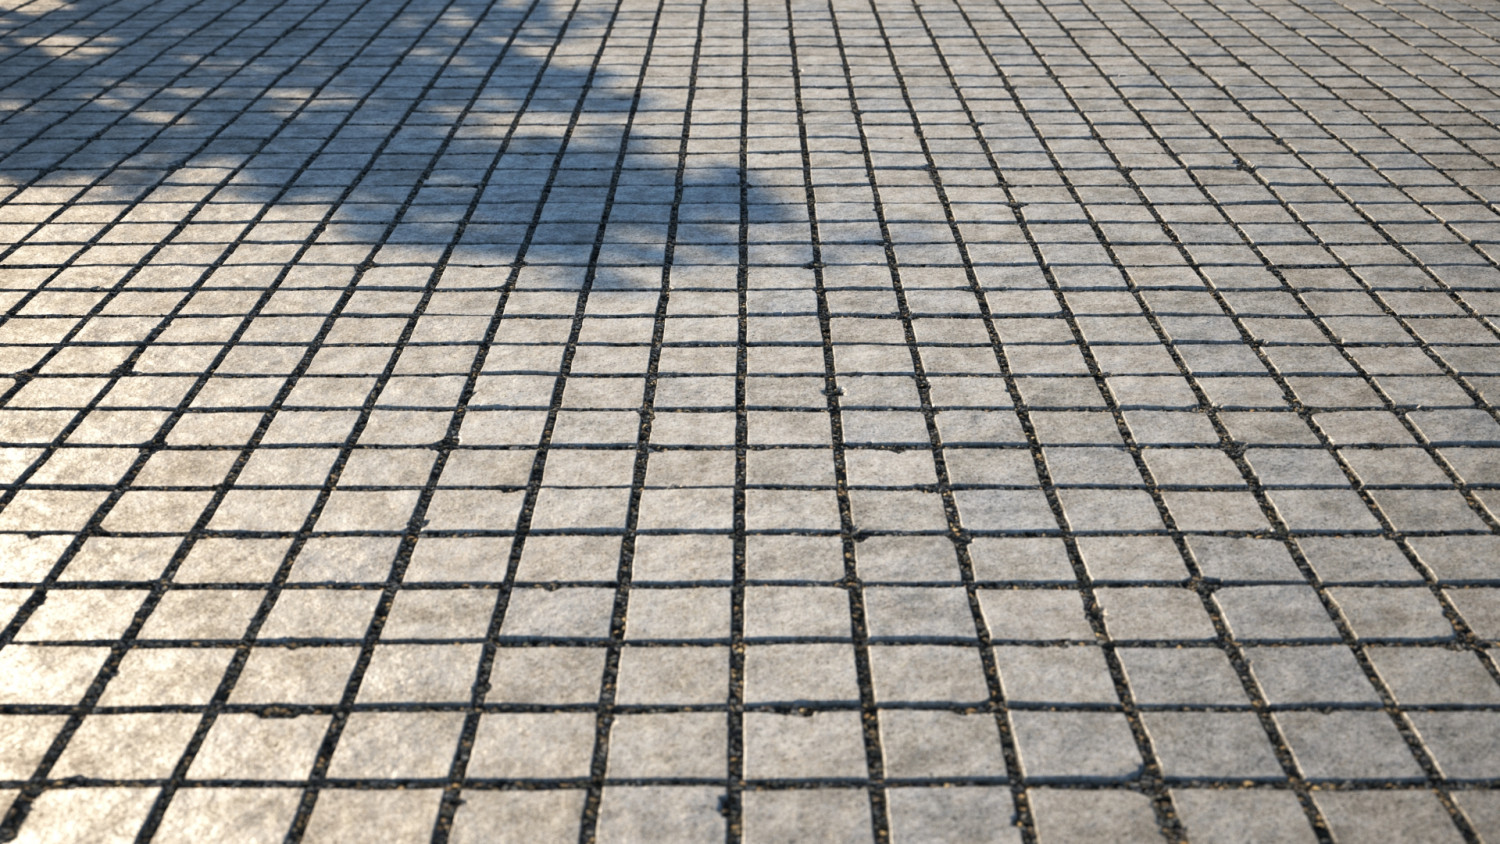 Granite pavement texture